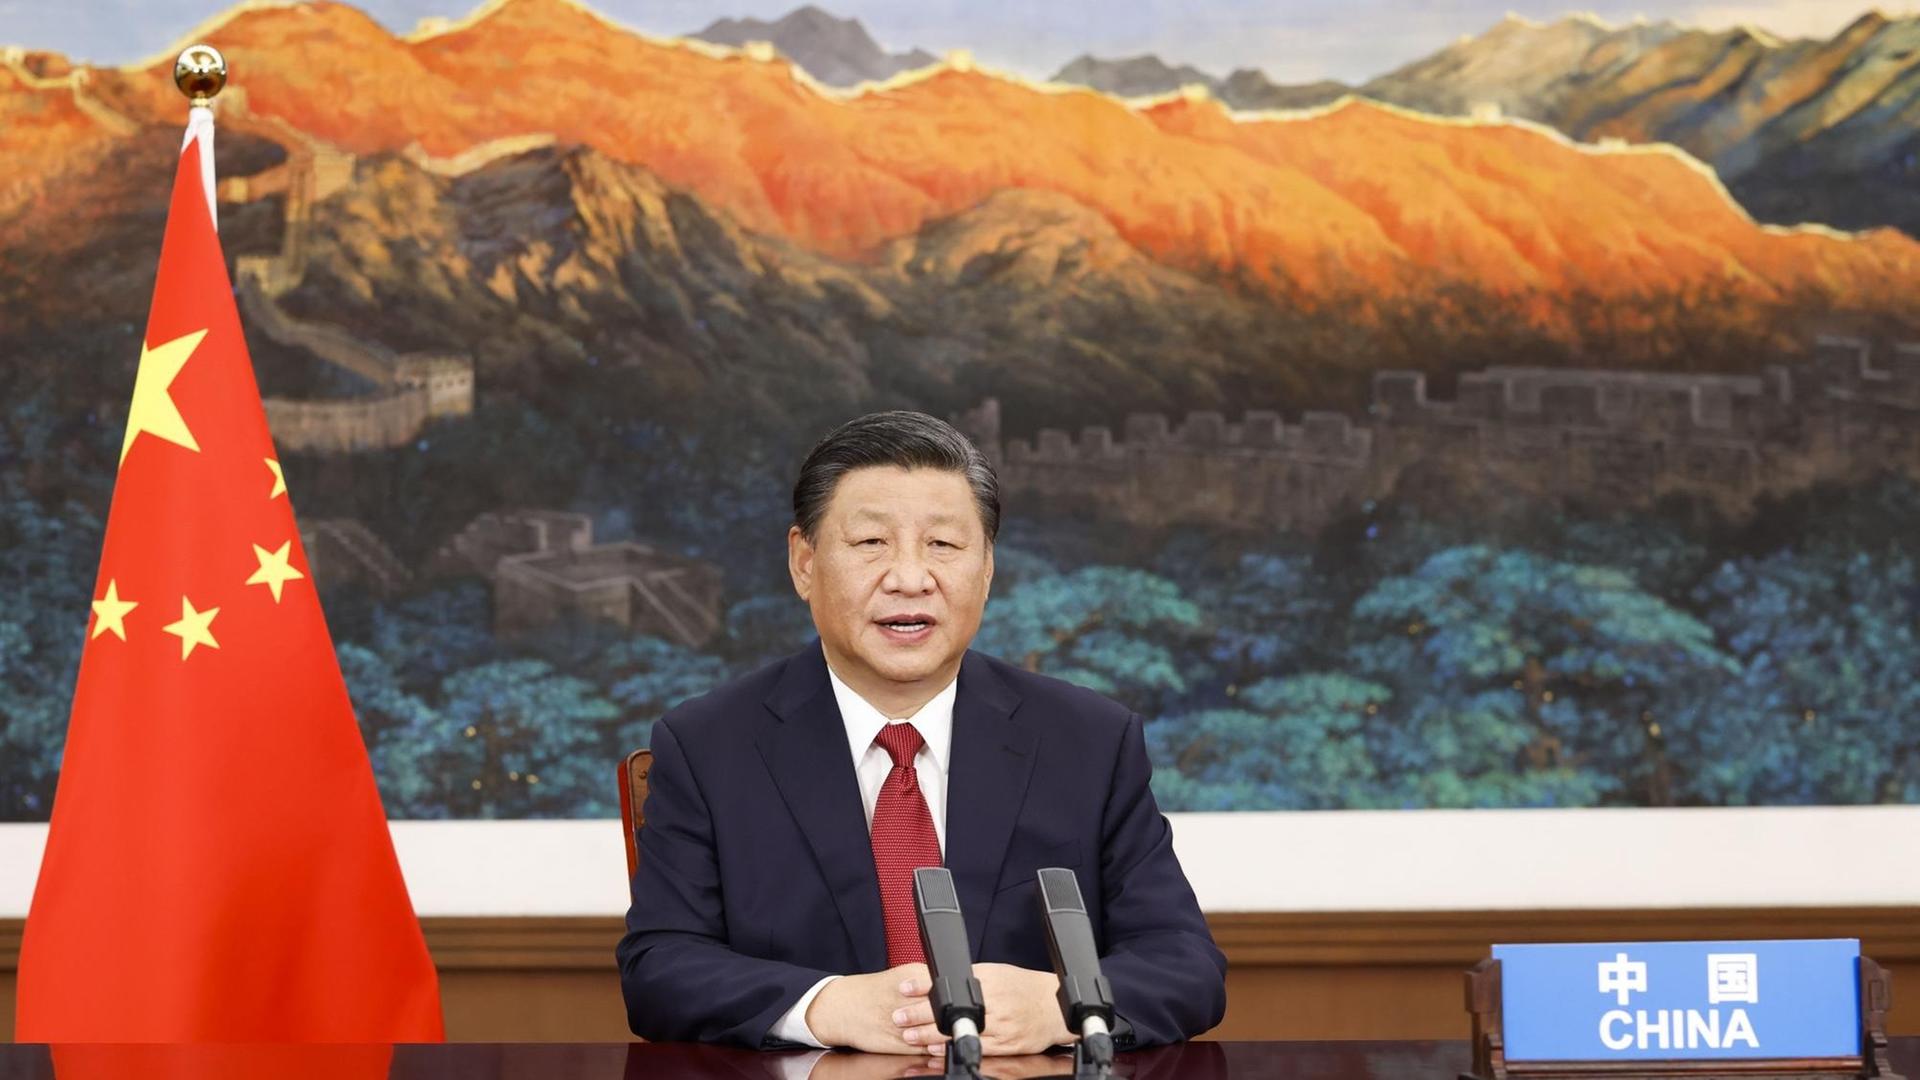 Der chinesische Präsident Xi Jinping bei der Ansprache der UN Vollversammlung am 21. September 2021, per Videoschalte